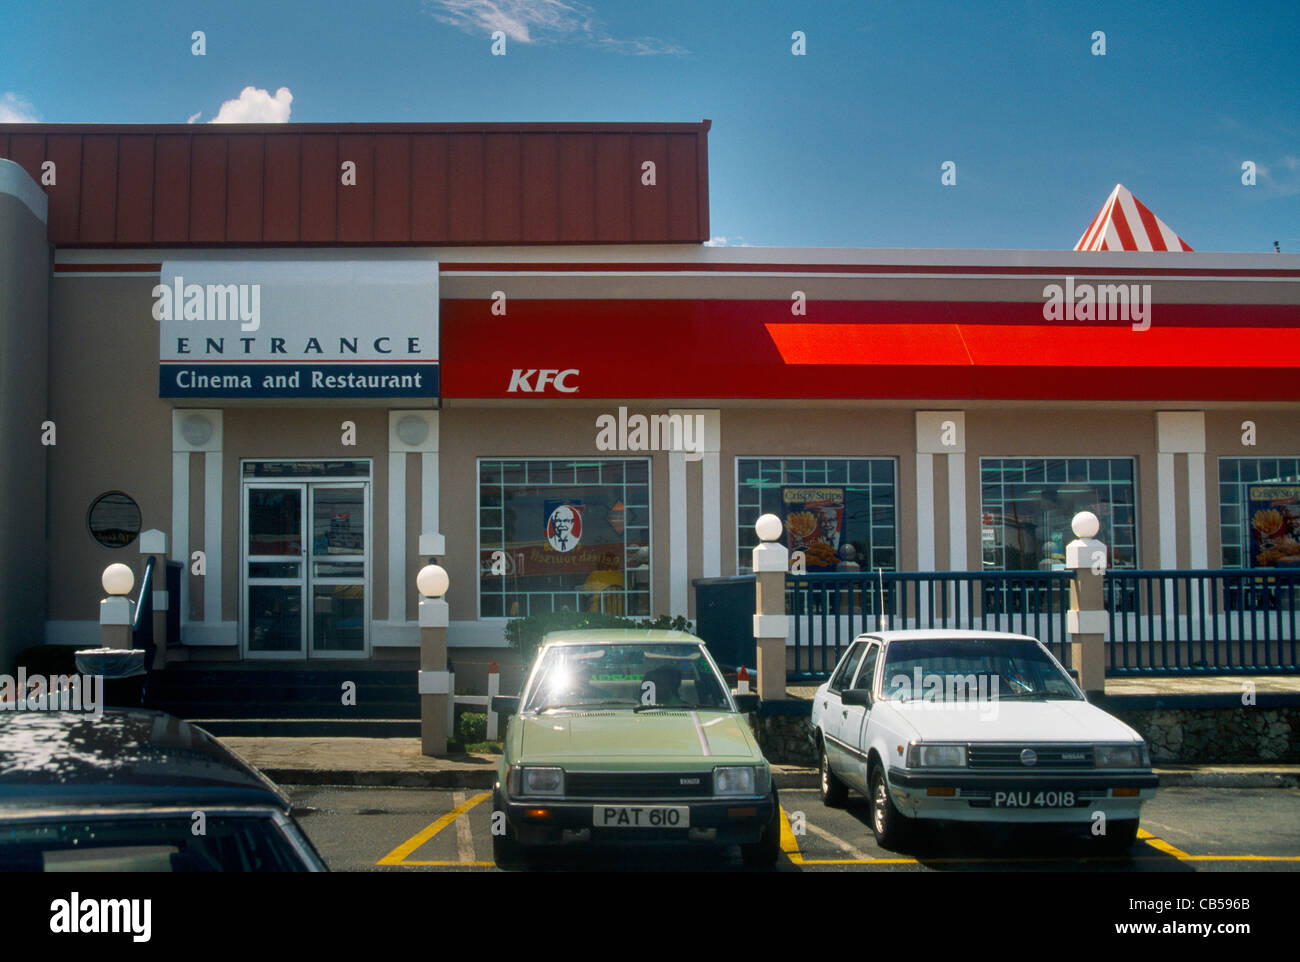 Port Of Spain Trinidad Kentucky Fried Chicken (KFC) Restaurant And Cinema Stock Photo